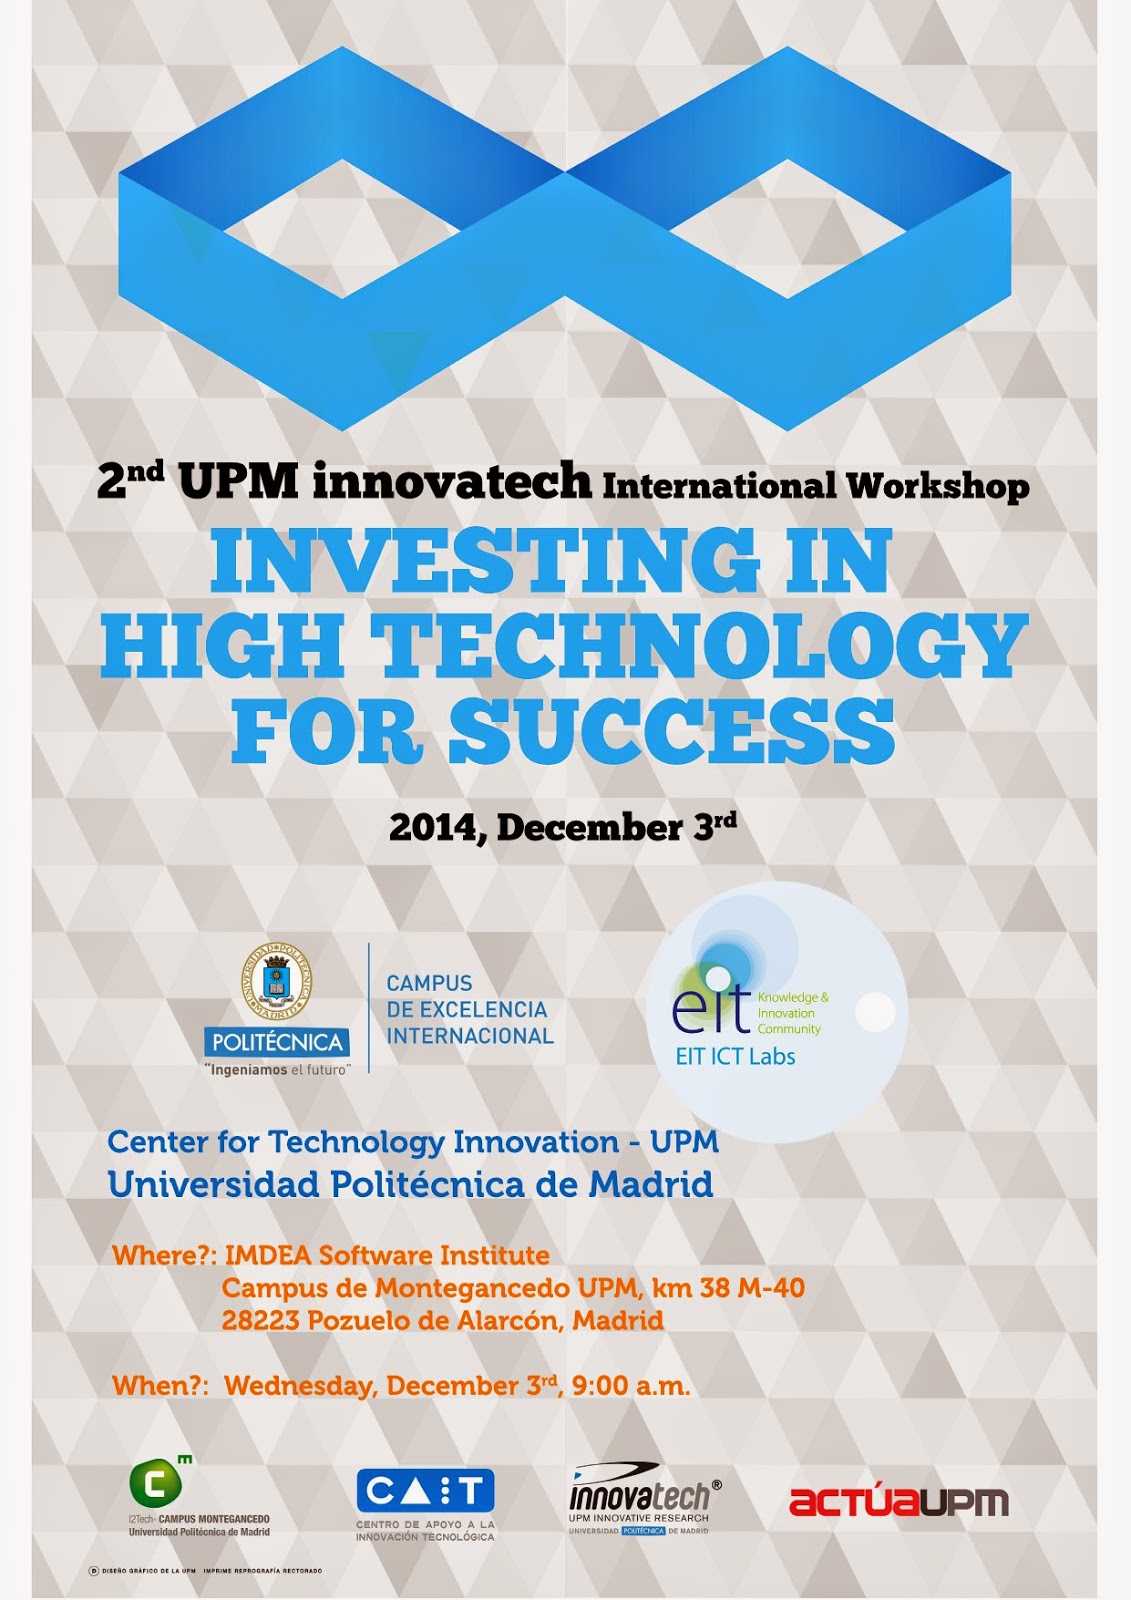  2nd UPM innovatech International Workshop